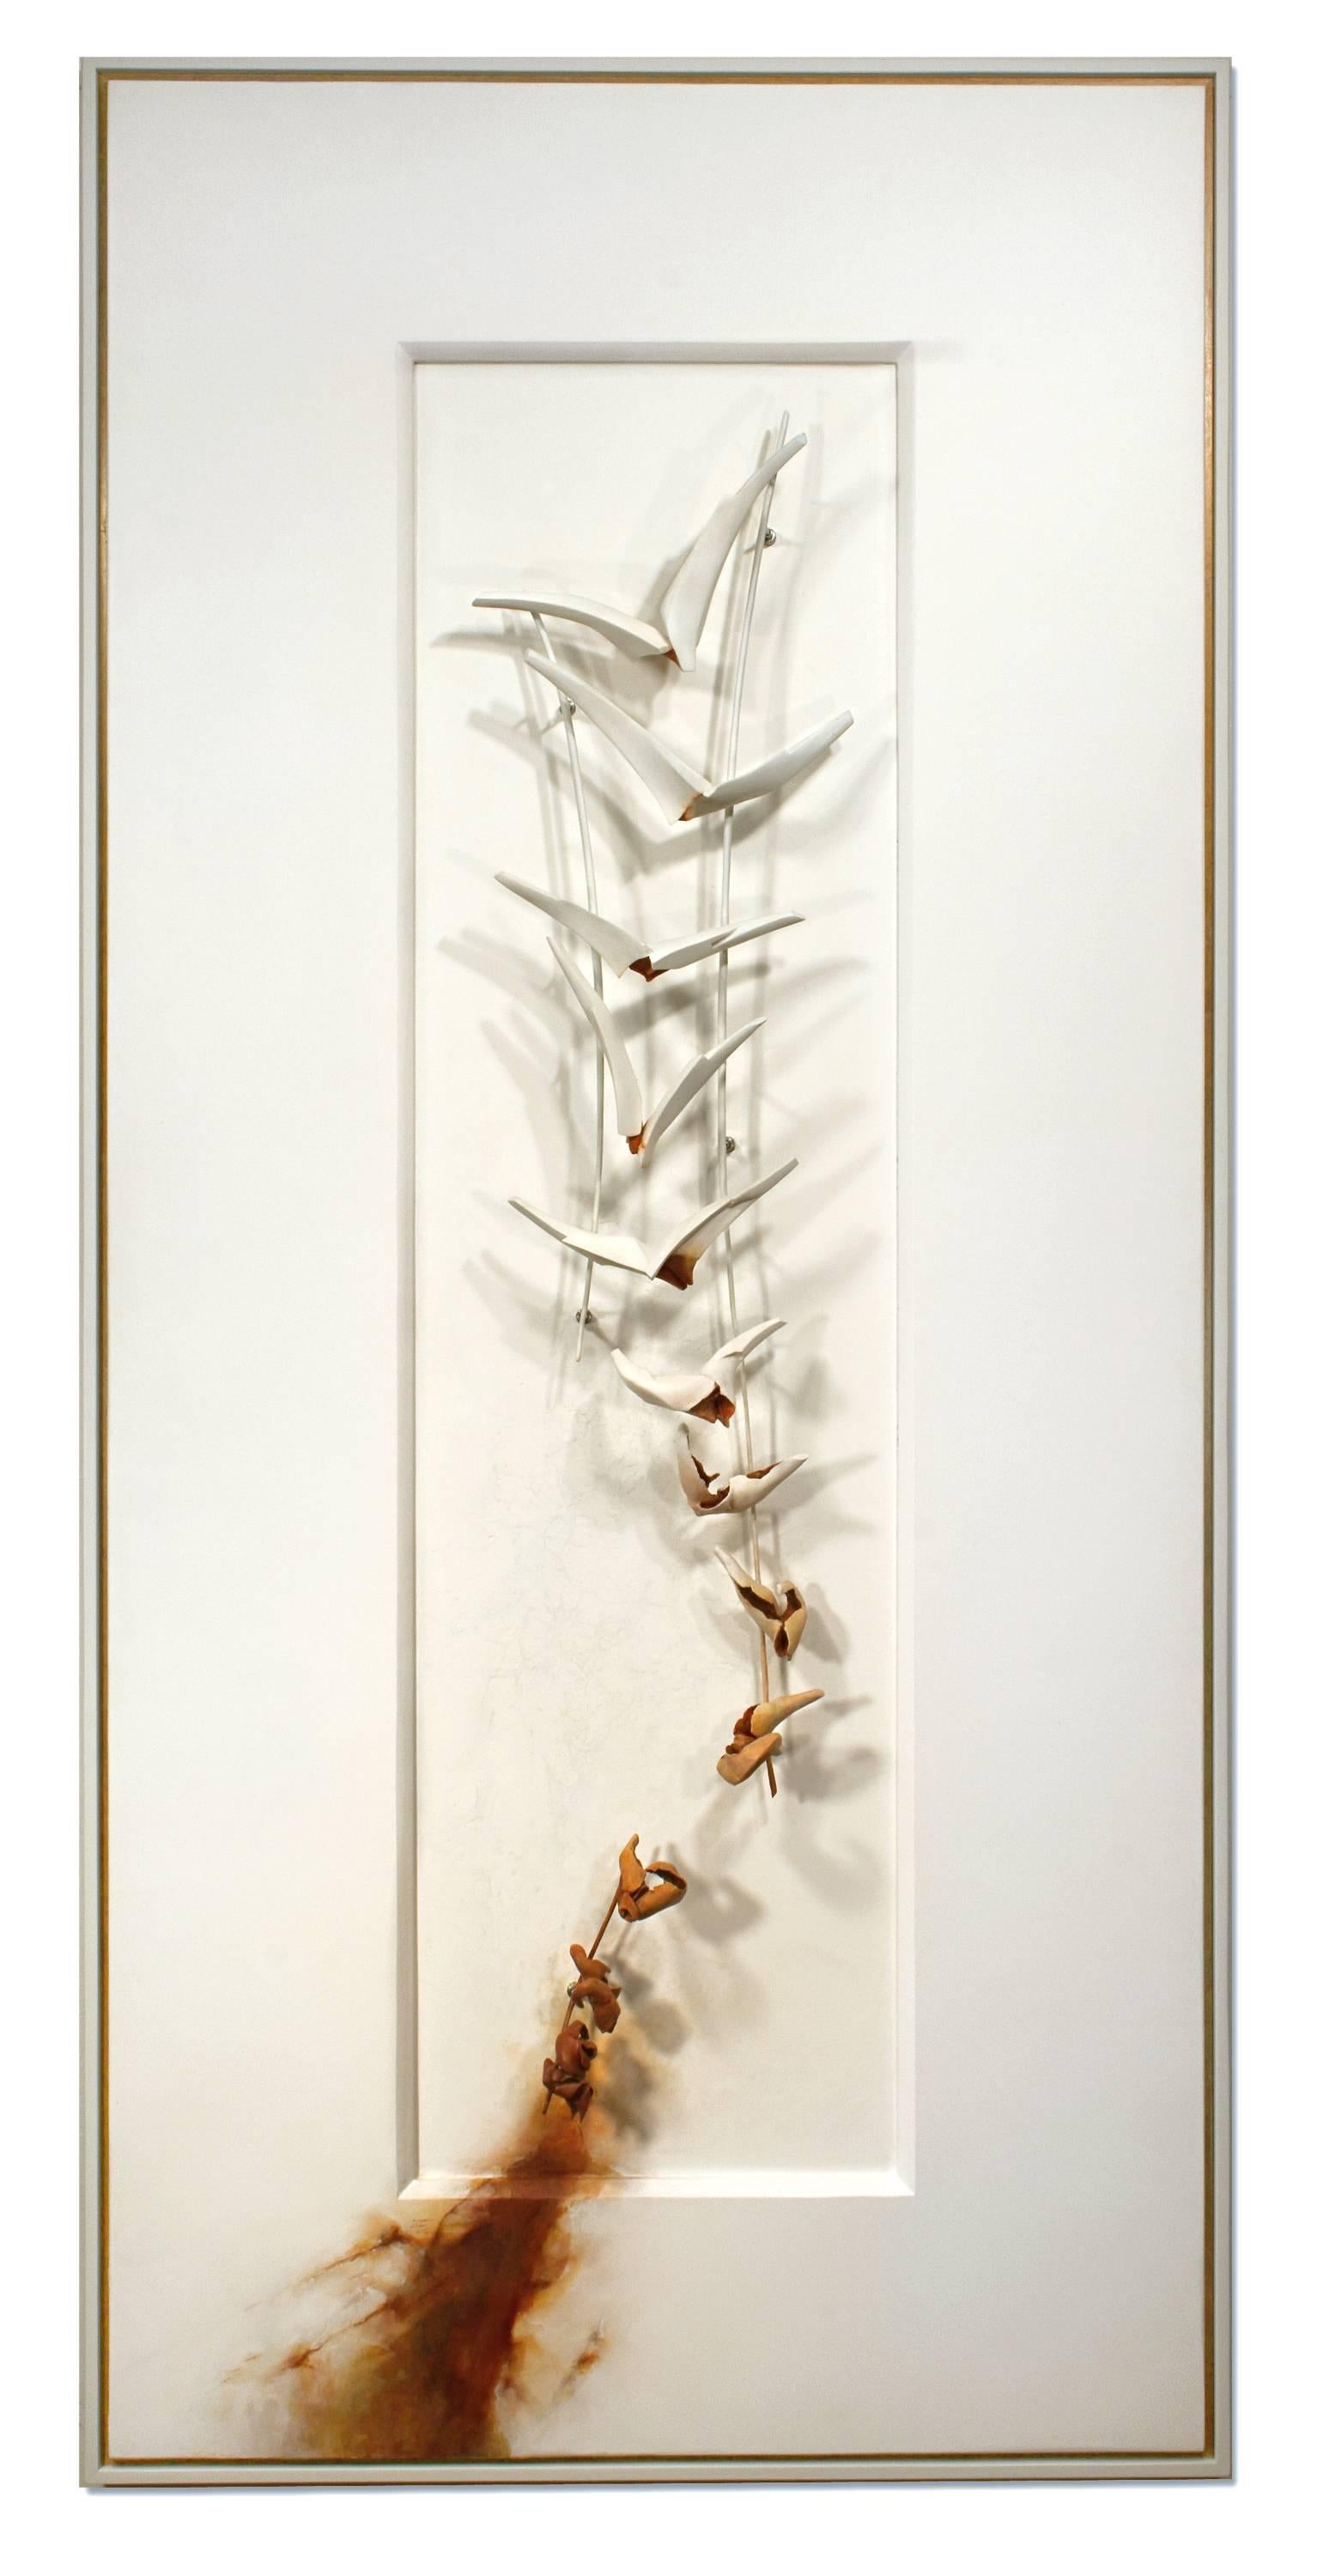 Large Pigment Metal Sculpture: 'Into the Throats of Birds' - Mixed Media Art by David Mellen